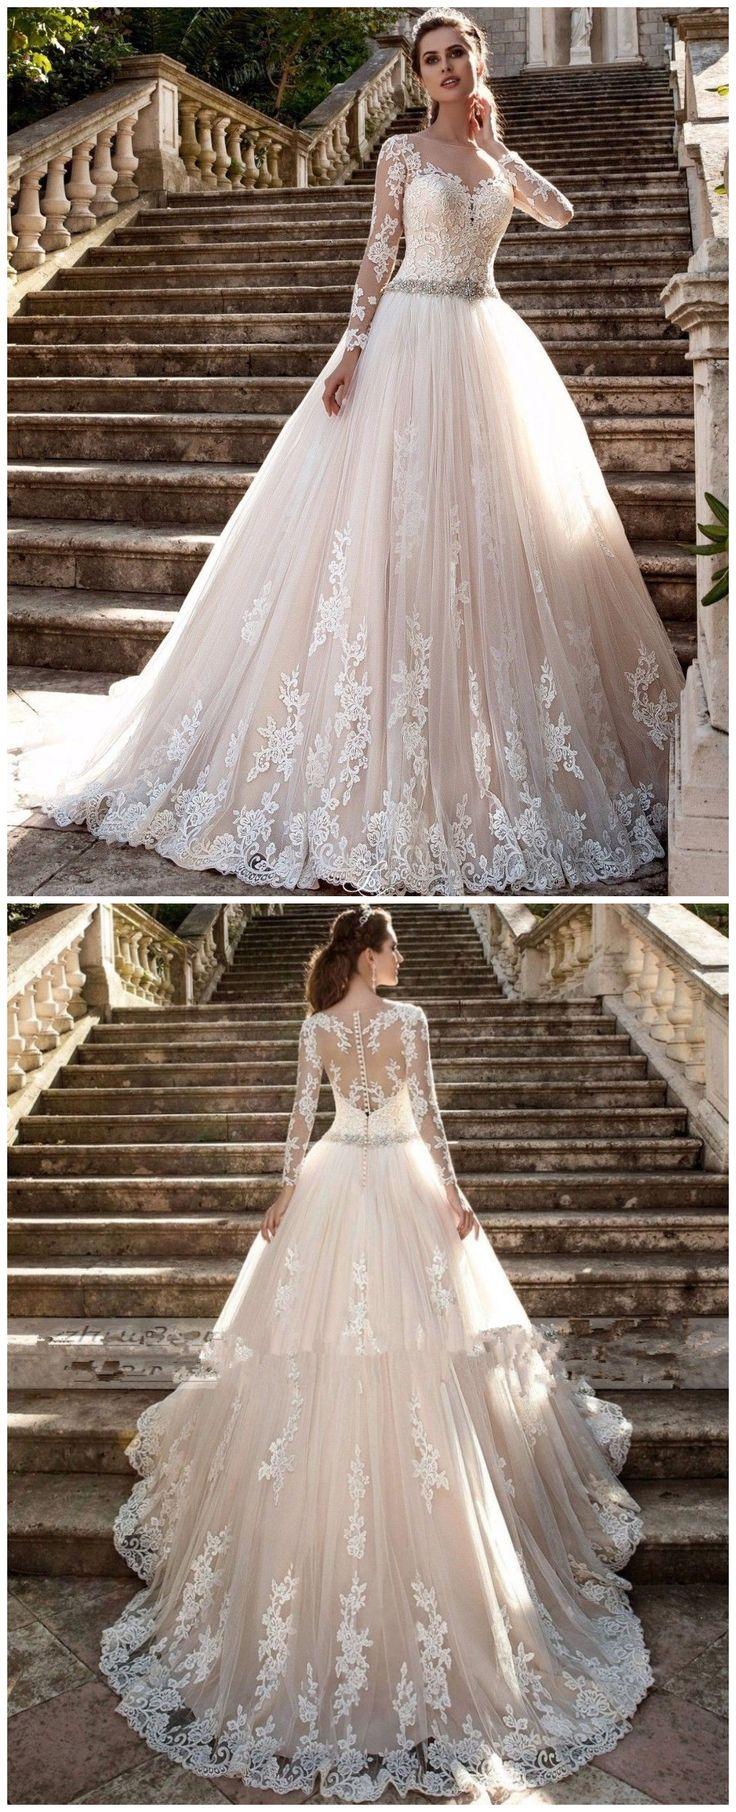 Hochzeit - Lace Bridal Ball Gown White Ivory Wedding Dress Custom Size Bridal Dresses From Olesa Wedding Shop